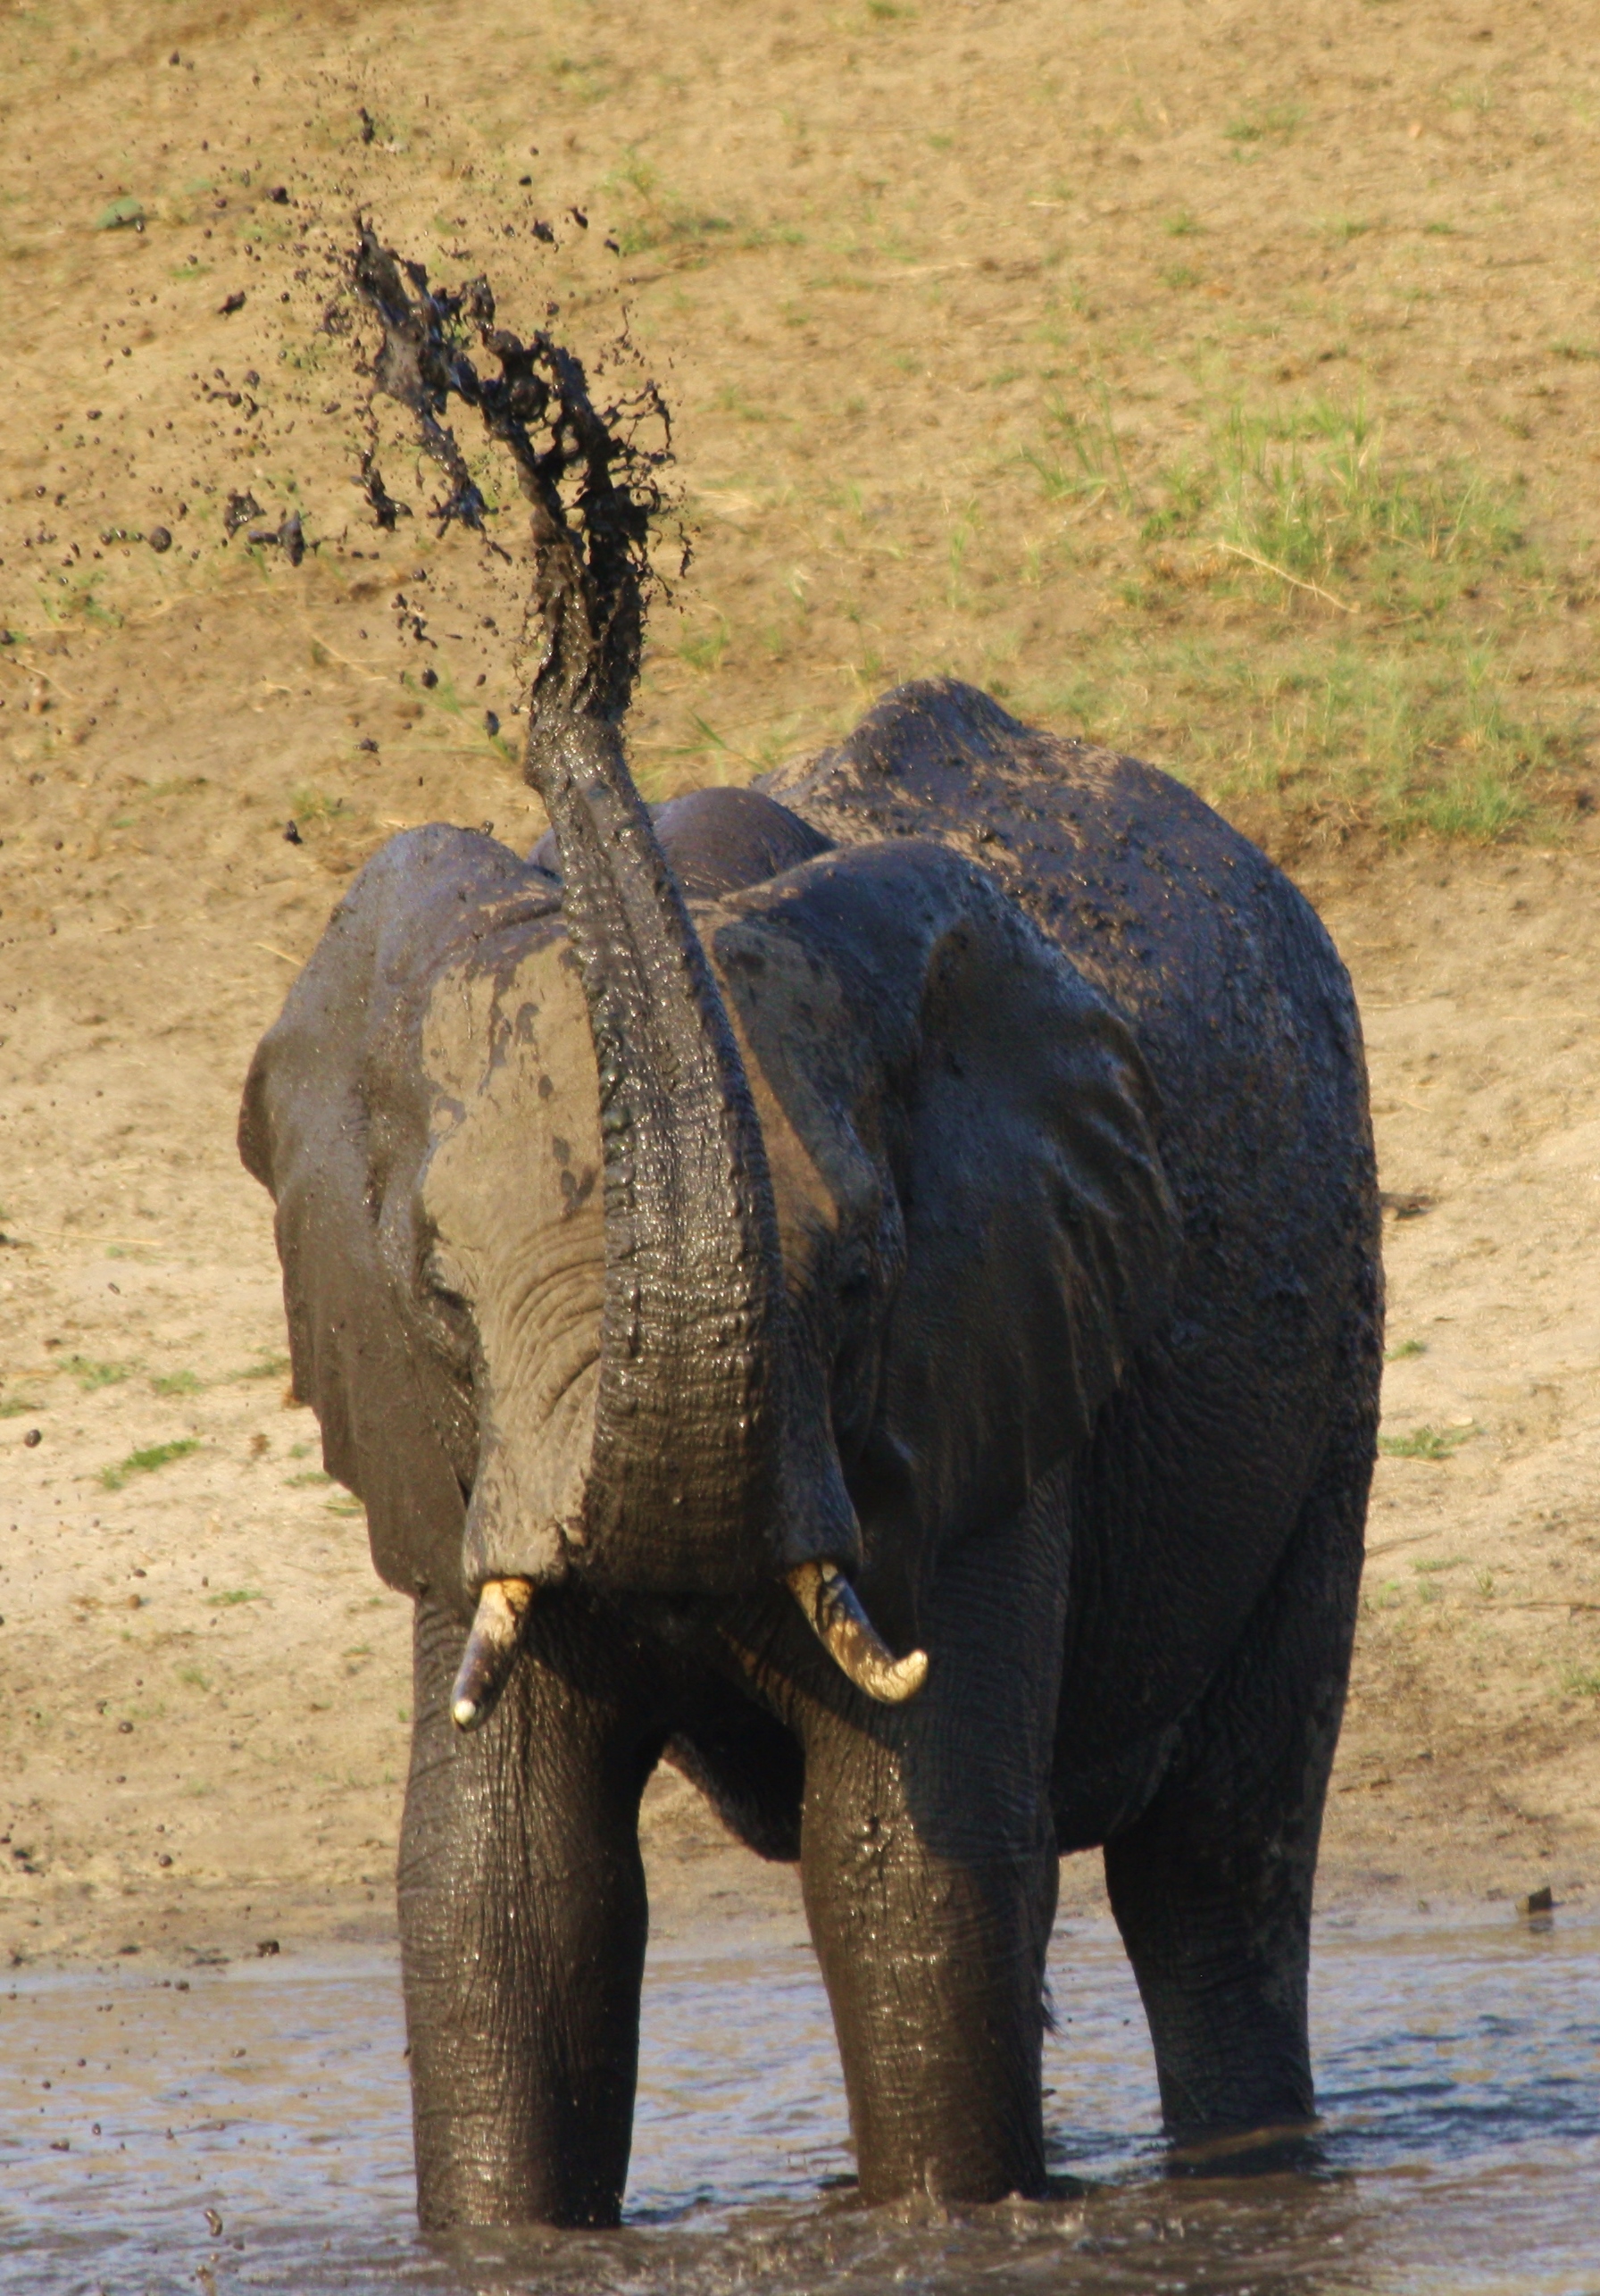 Watching this elephant splashing himself was a highlight of our walking safari